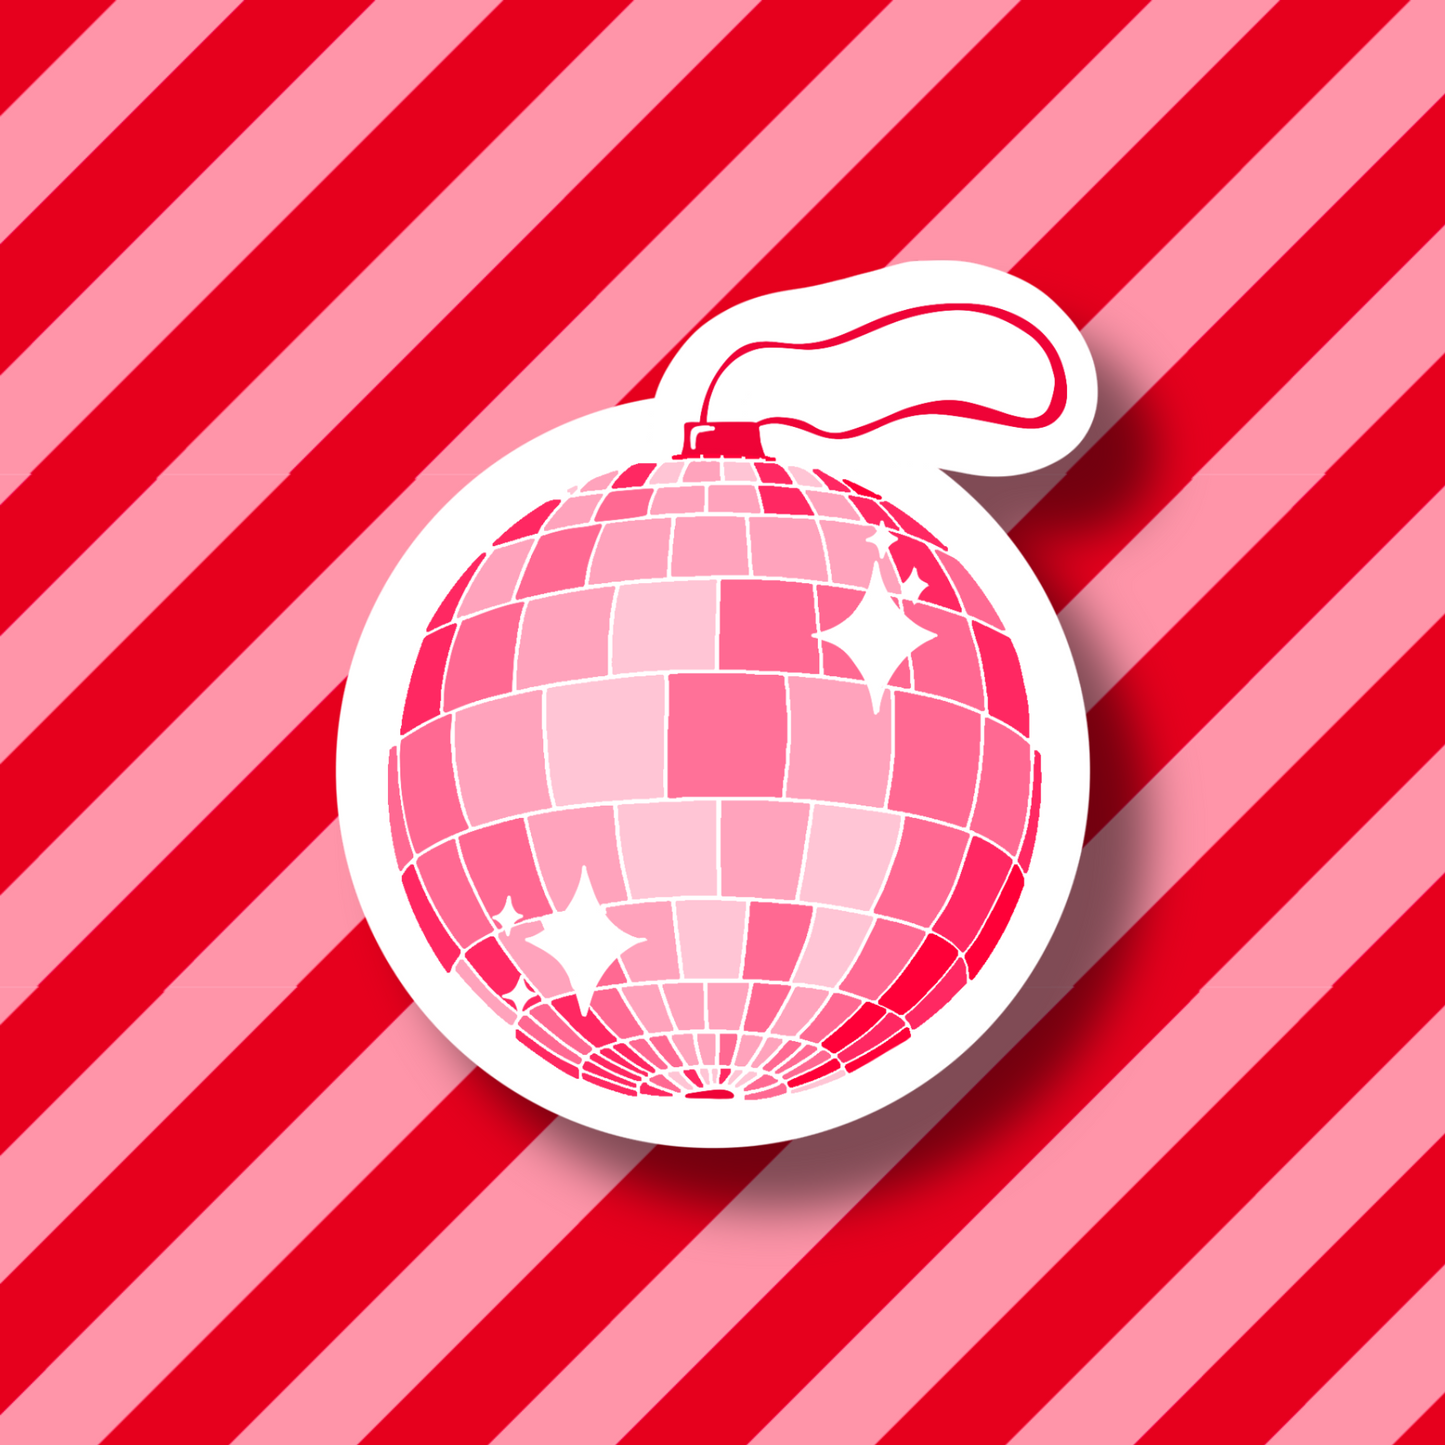 Pinkmas Sticker Bundle | A Very Merry Birch Studios Christmas